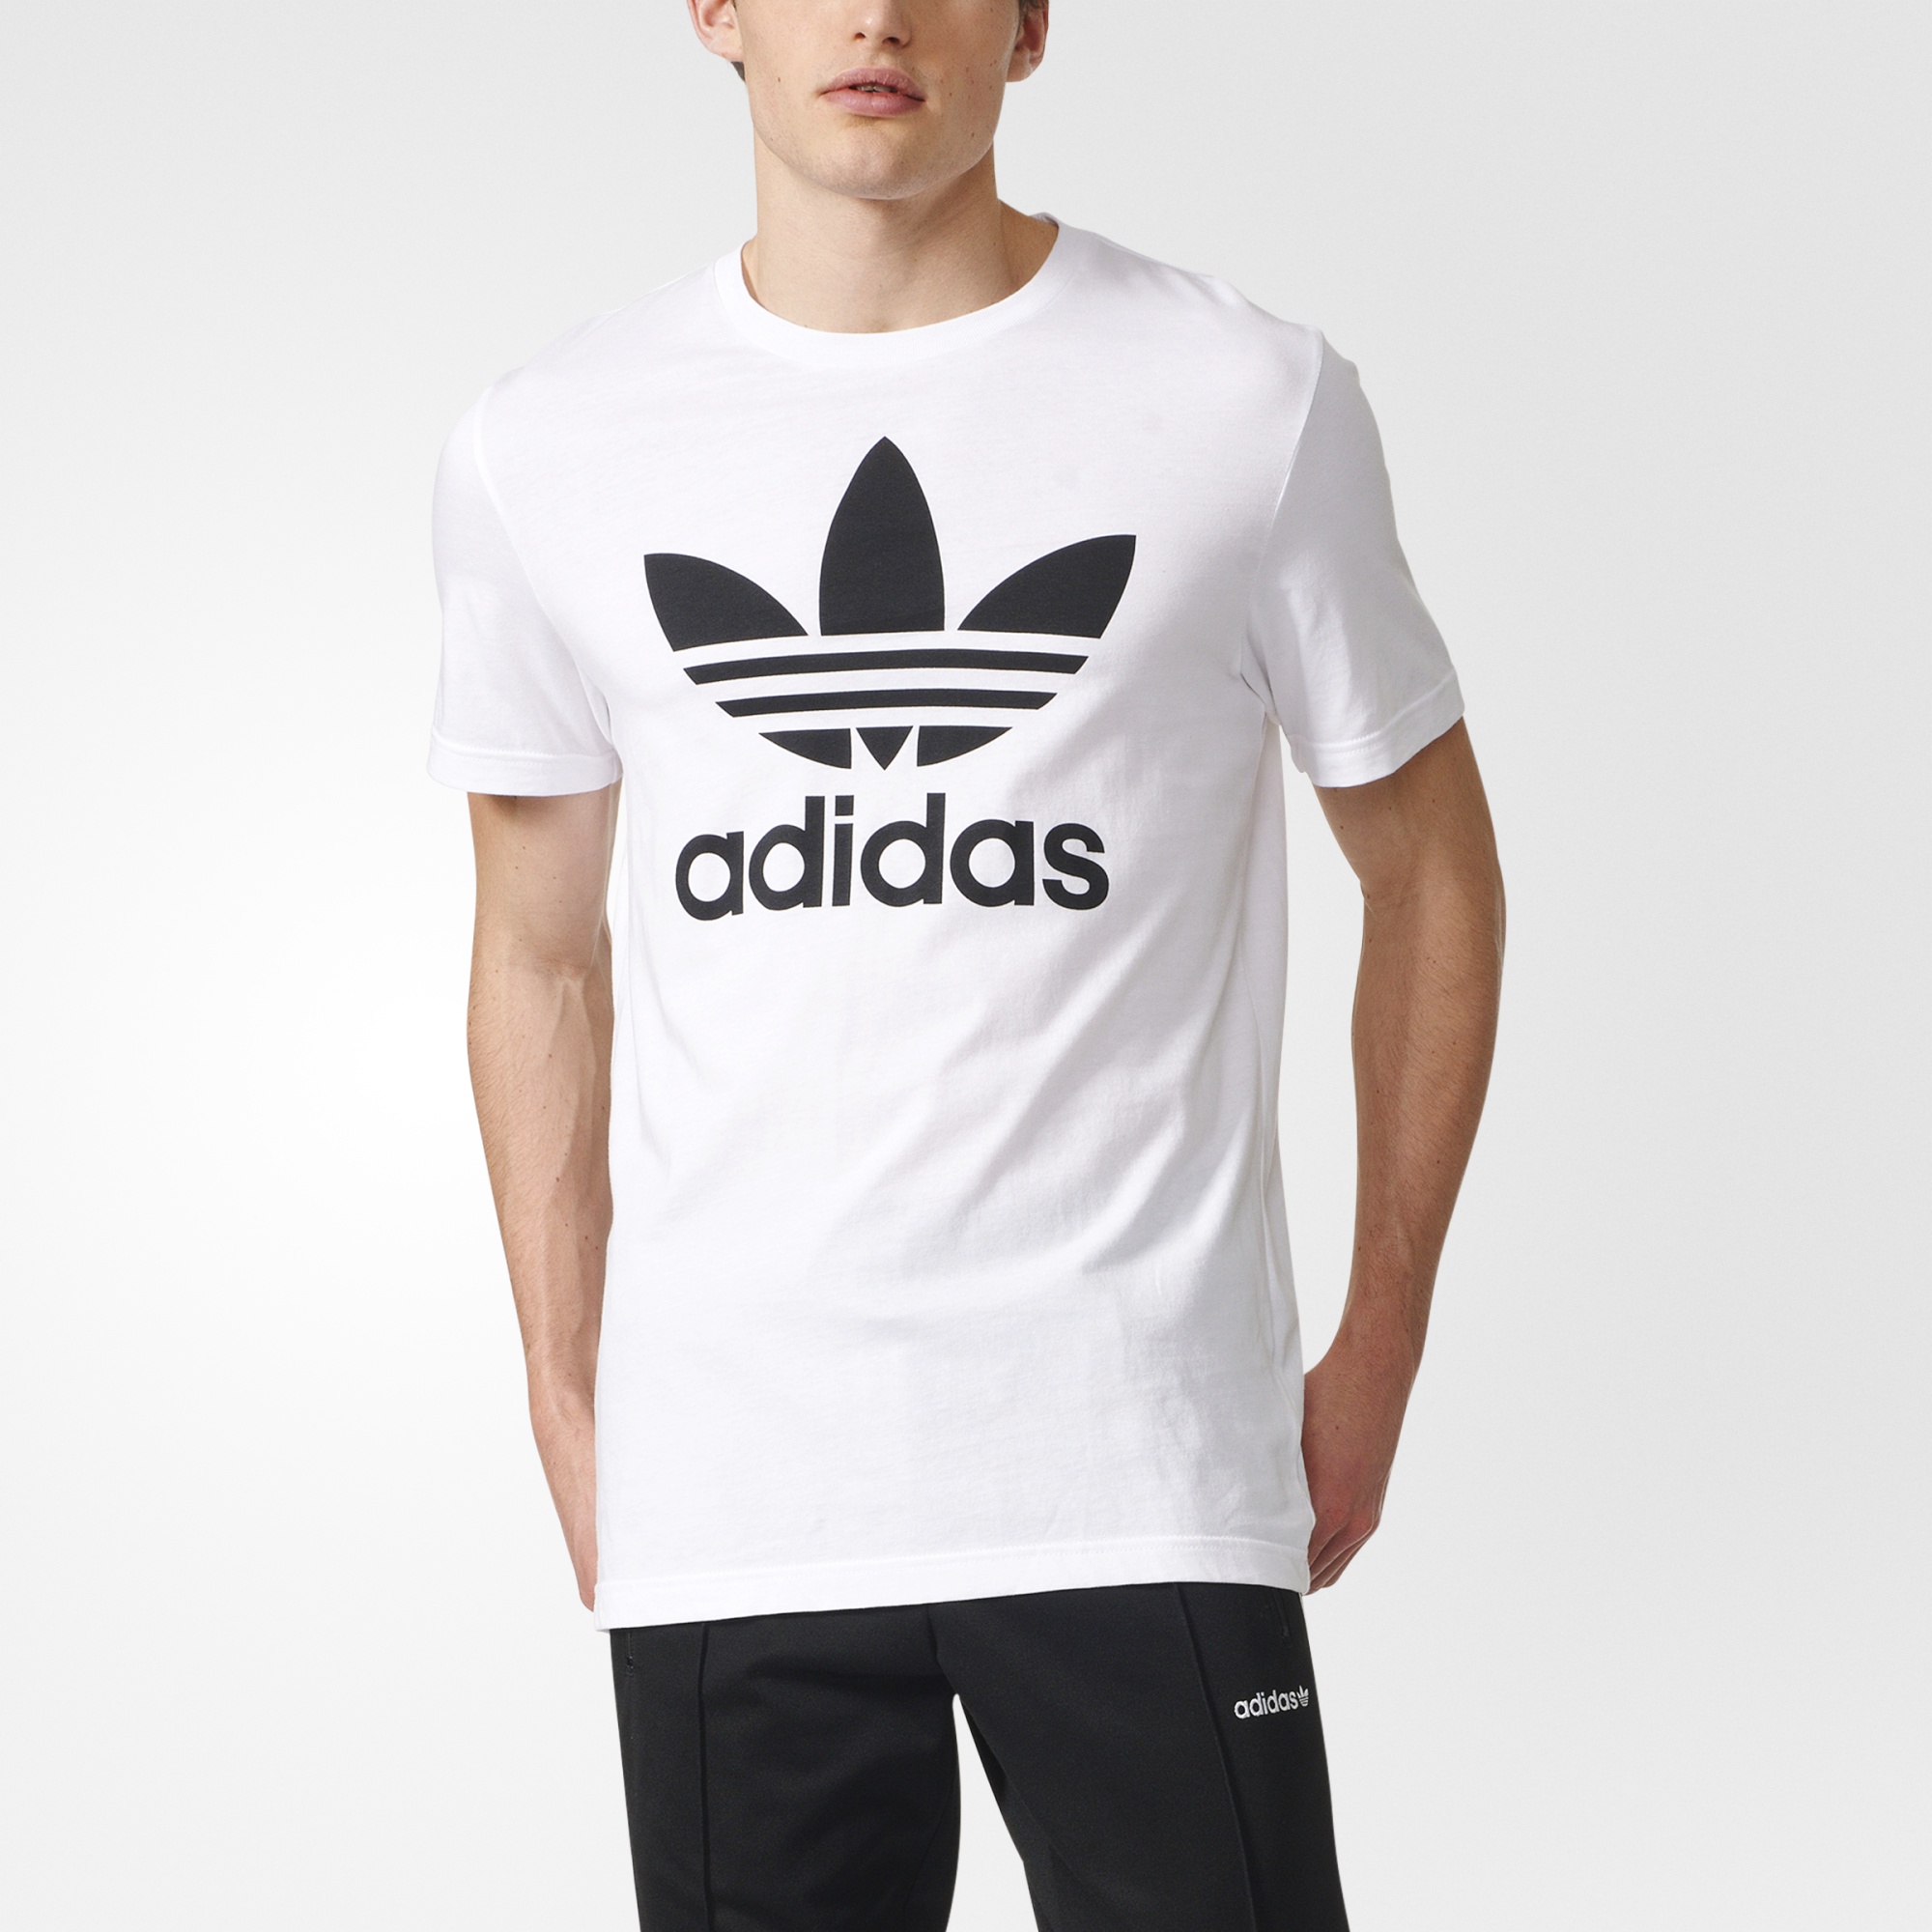 Adidas Shirt adidas trefoil tee - white | adidas us VEXNDVM